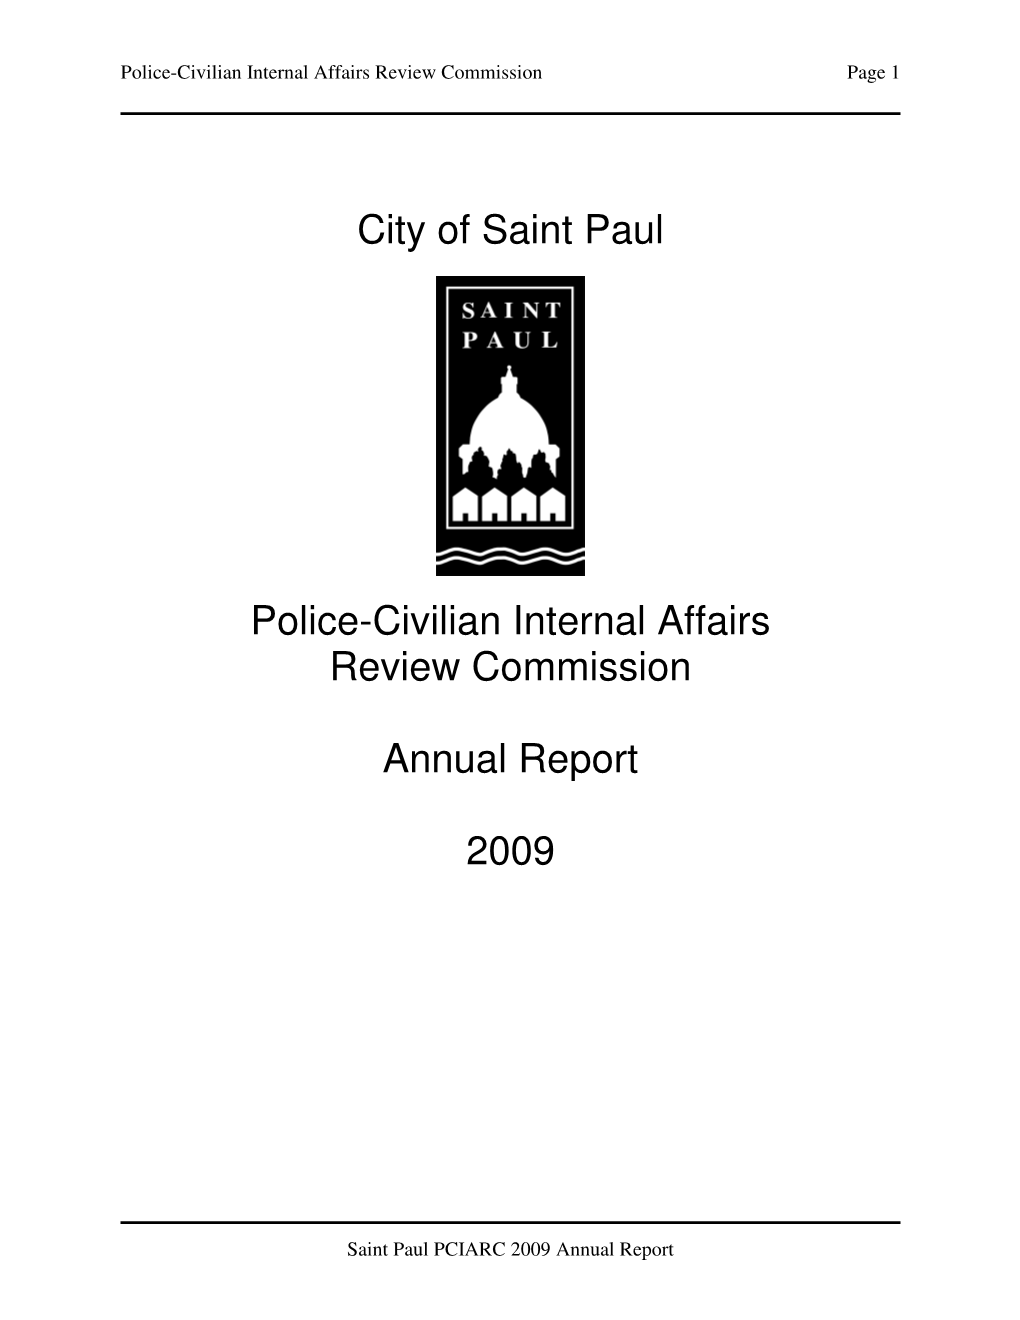 City of Saint Paul Police-Civilian Internal Affairs Review Commission